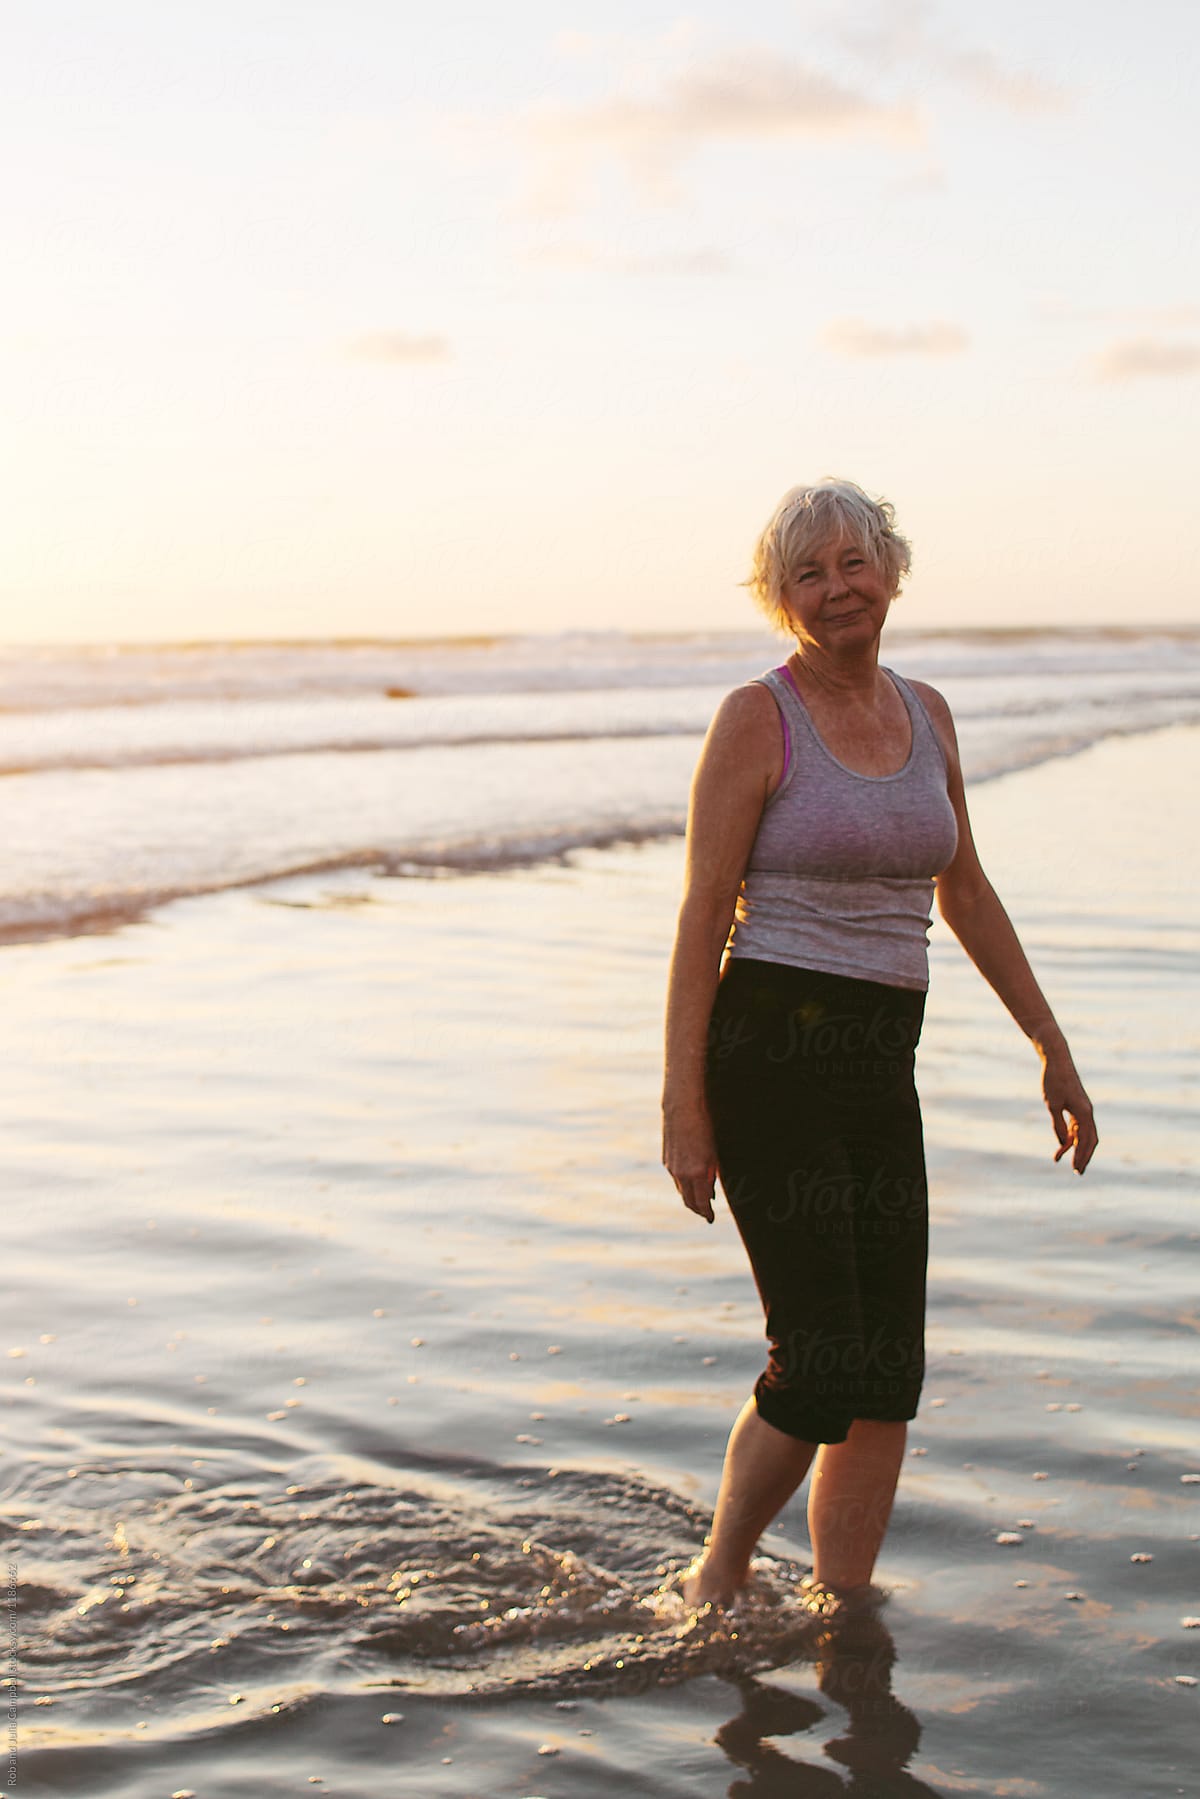 Mature woman enjoying herself on the beach Stock Photo - Alamy